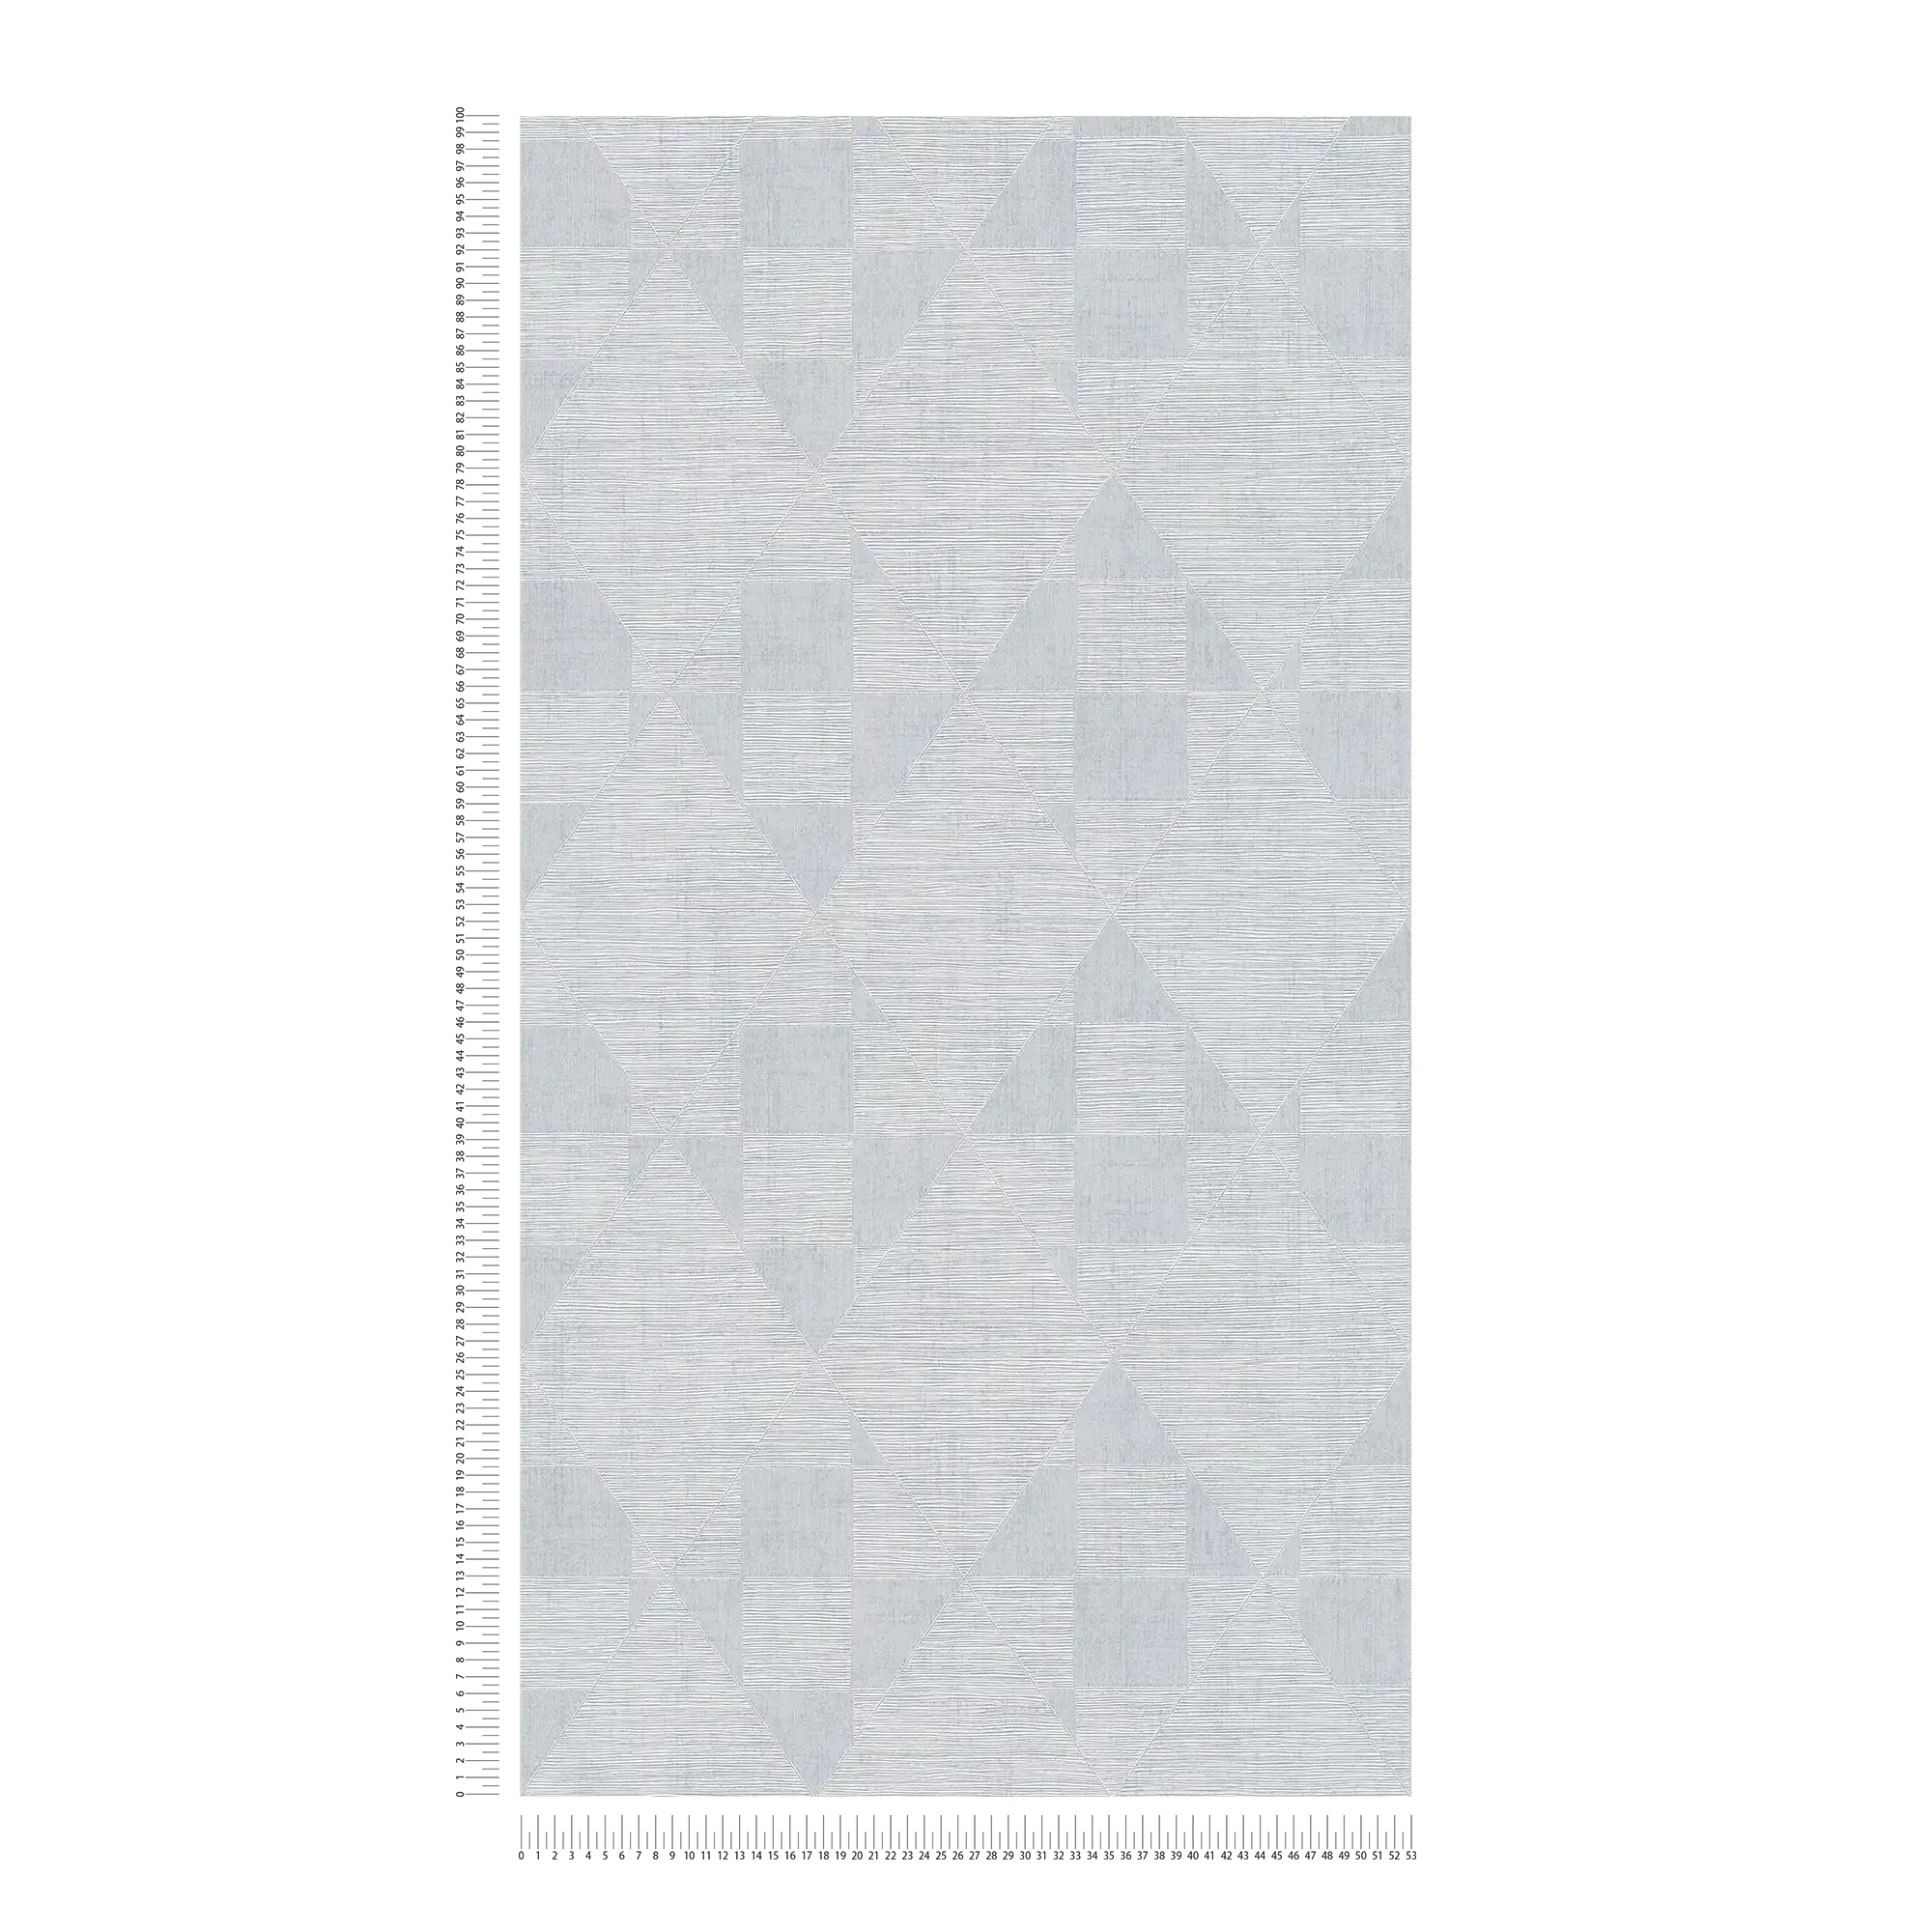             Wallpaper silver metallic design with geometric pattern - grey
        